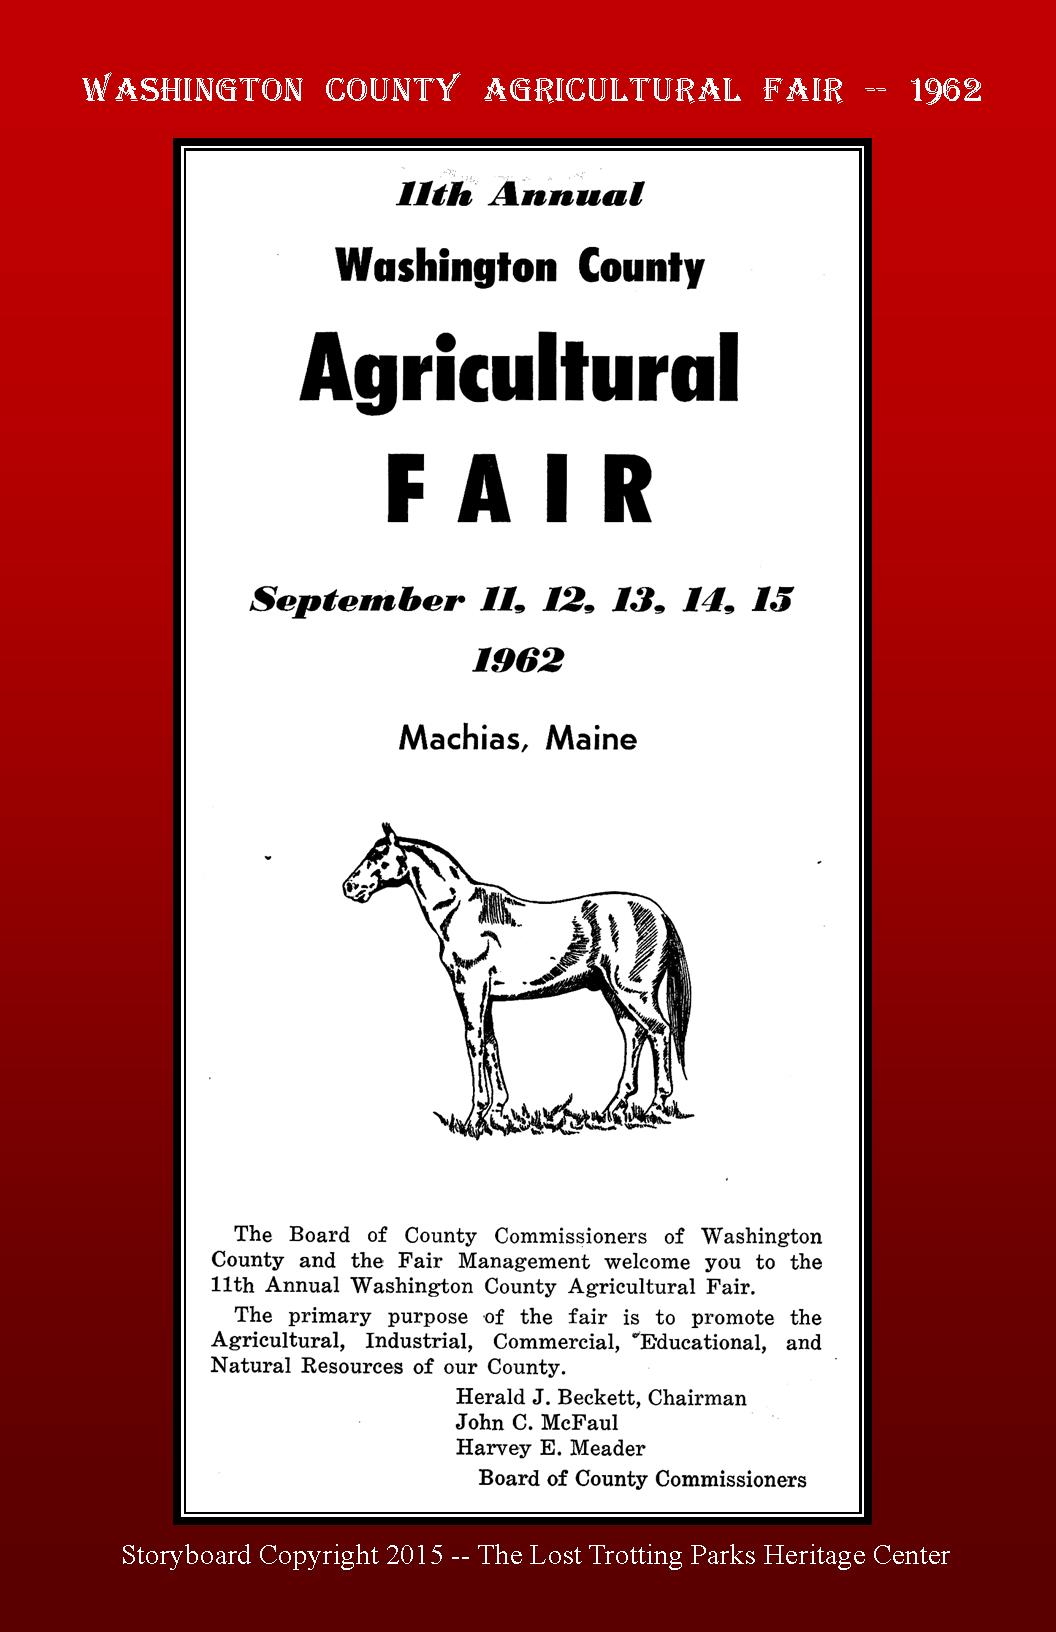 1962 — The 11th Annual Washington County Agricultural Fair — Machias, Maine – September 11 to 15